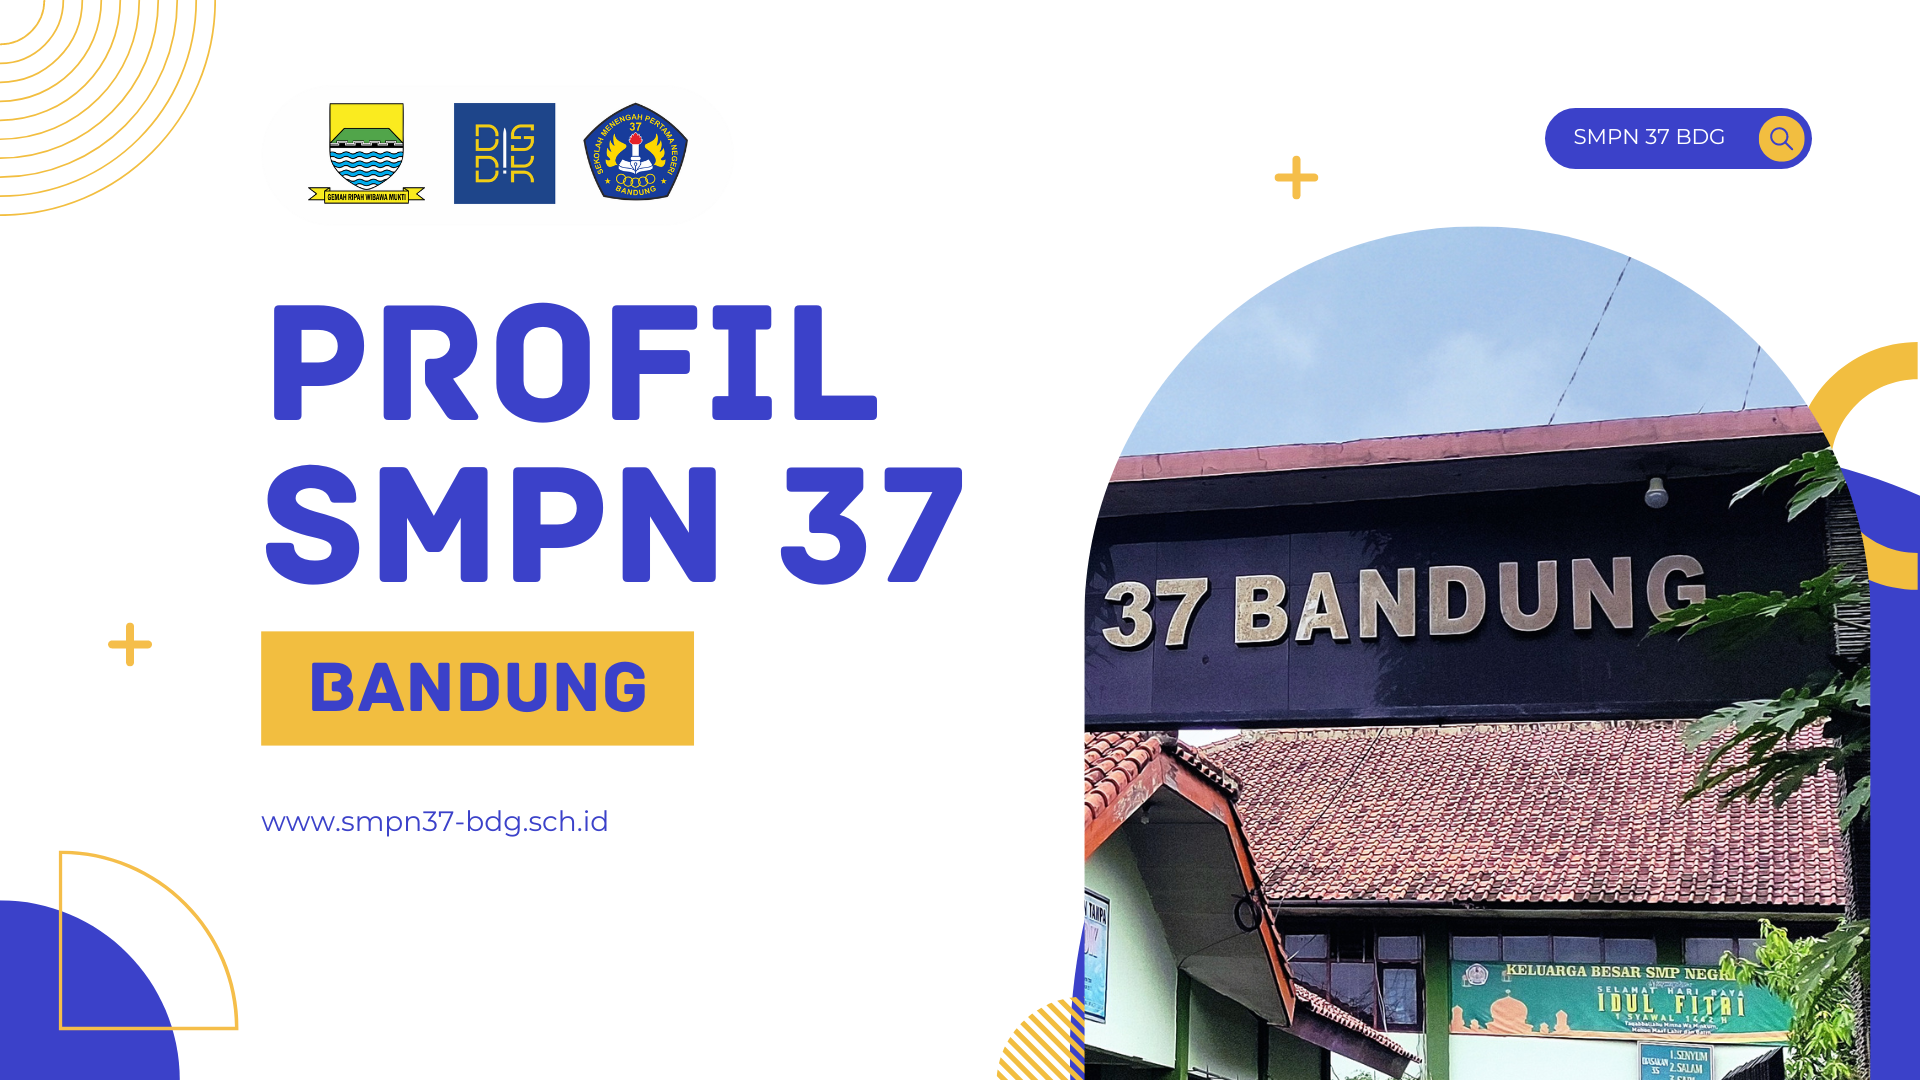 PROFIL SMPN 37 BANDUNG